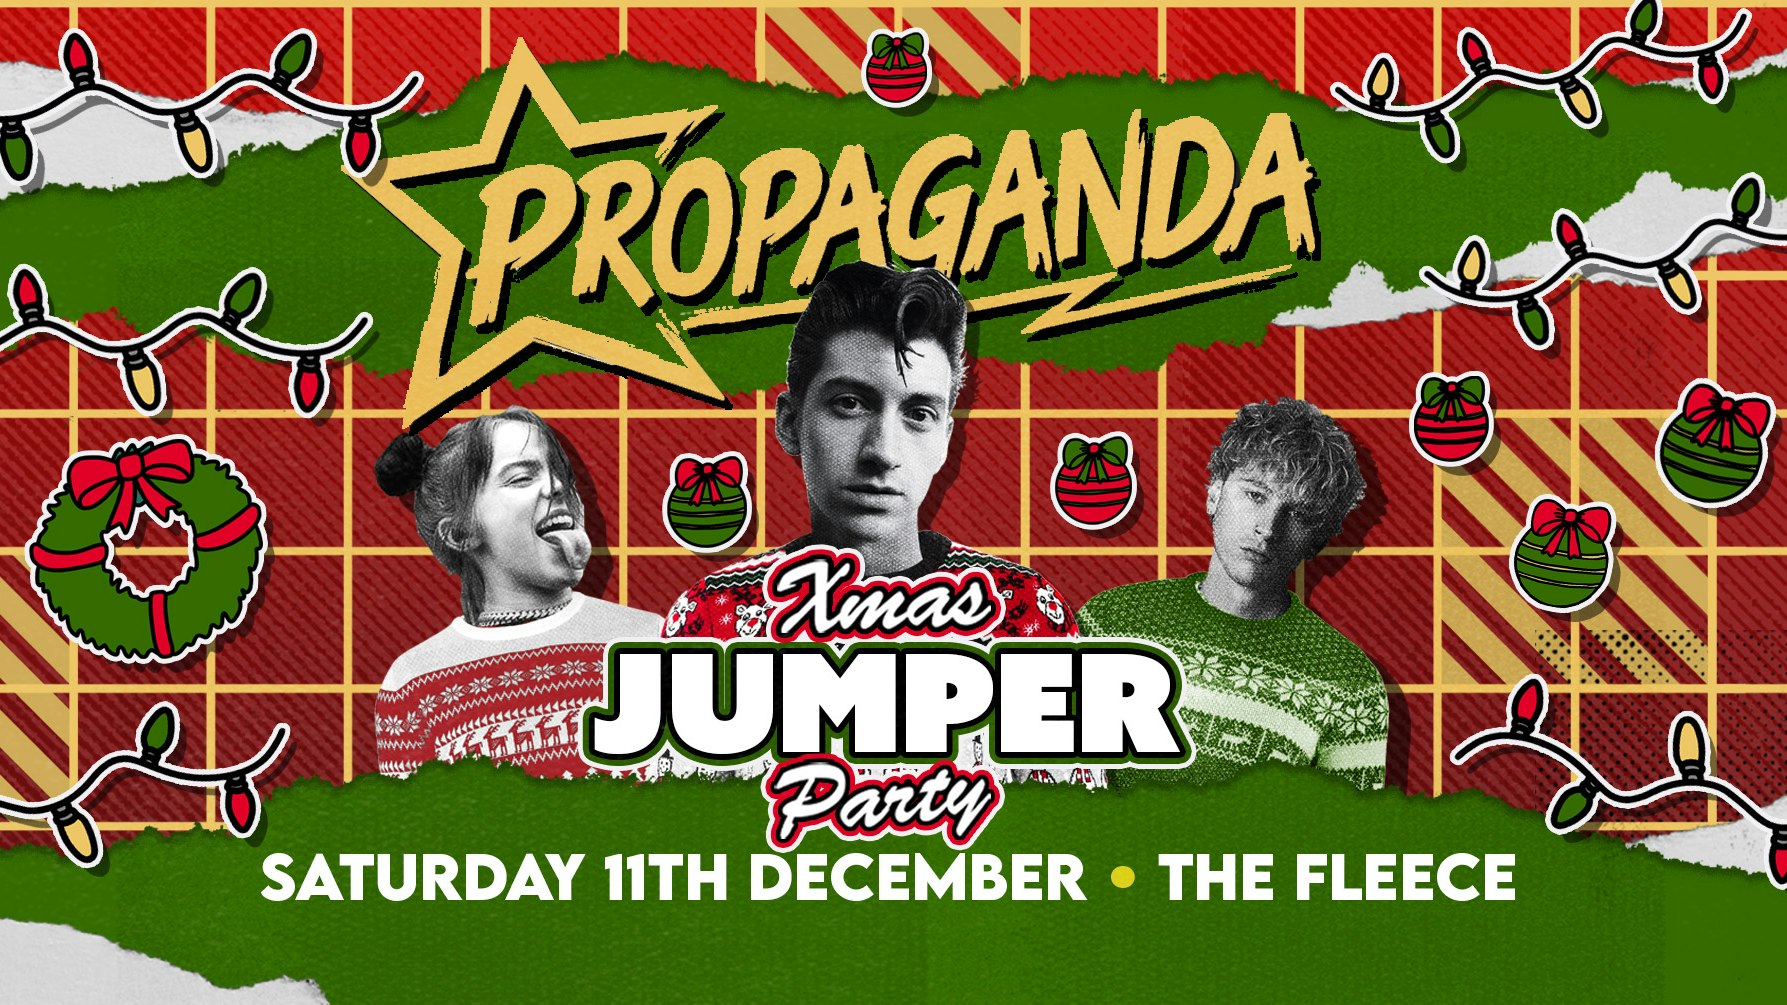 Propaganda Bristol – Xmas Jumper Party!